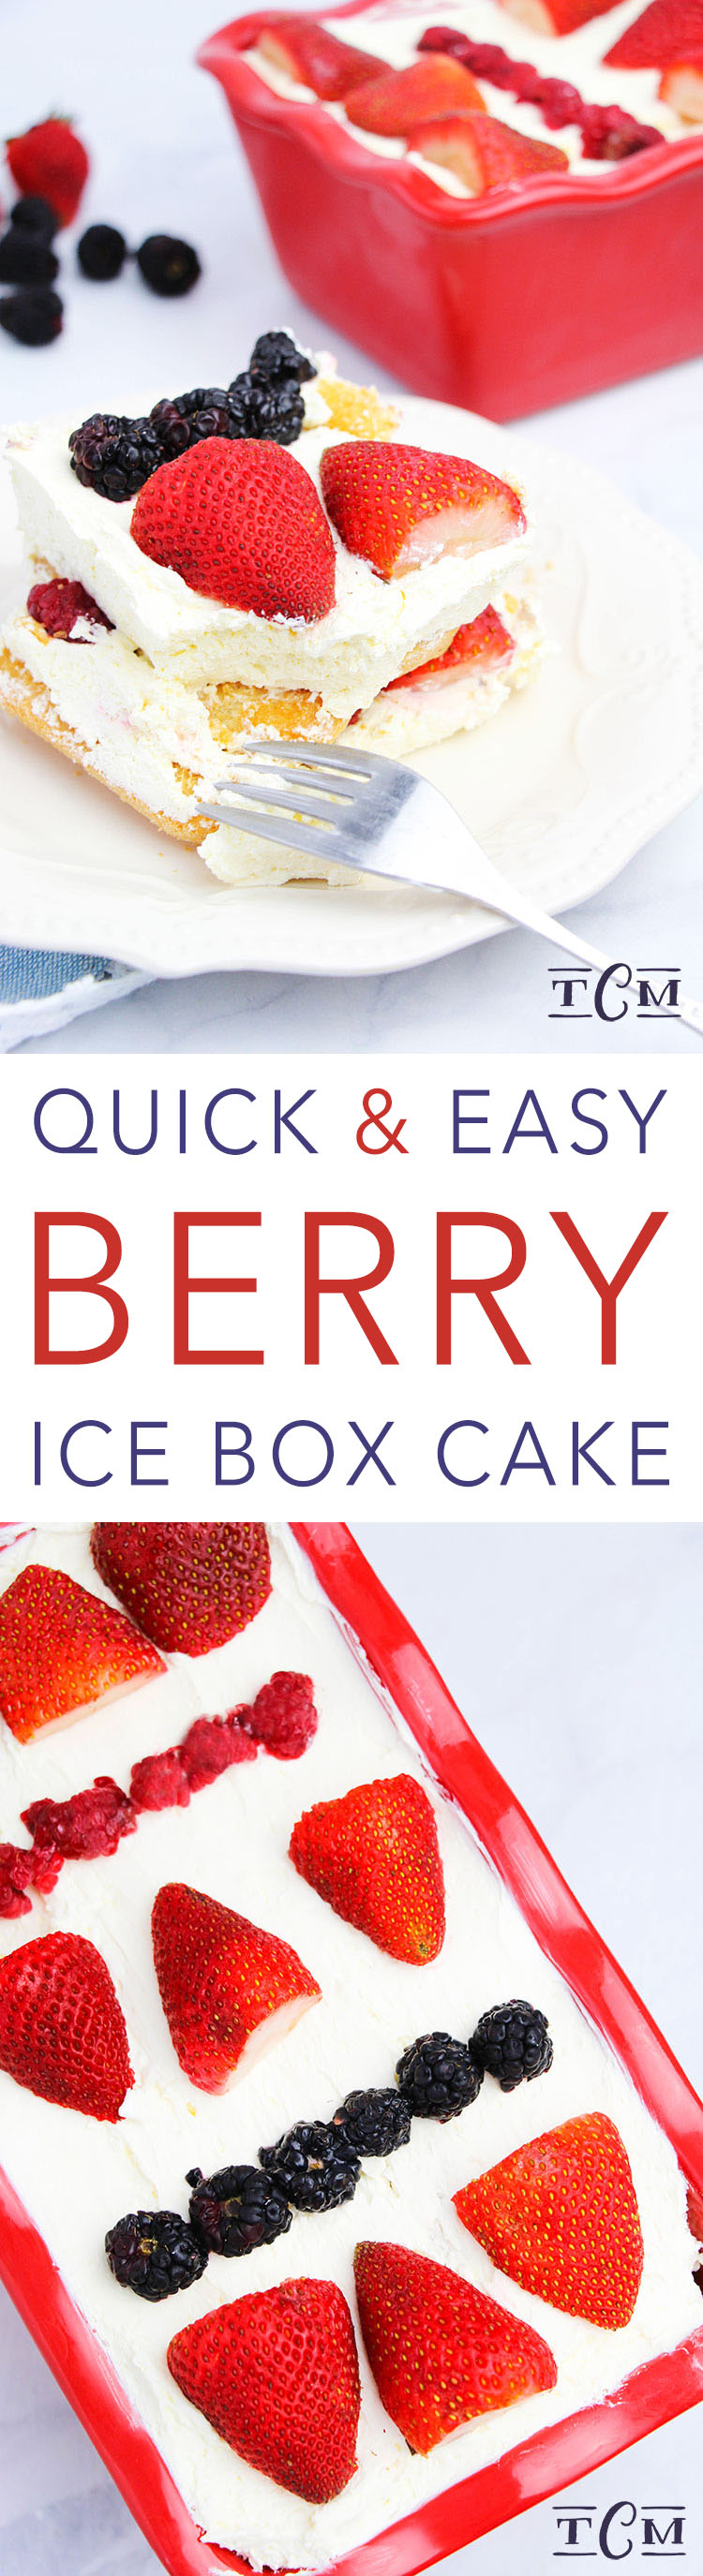 http://thecottagemarket.com/wp-content/uploads/2017/06/berry-icebox-cake-TOWER-1.jpg